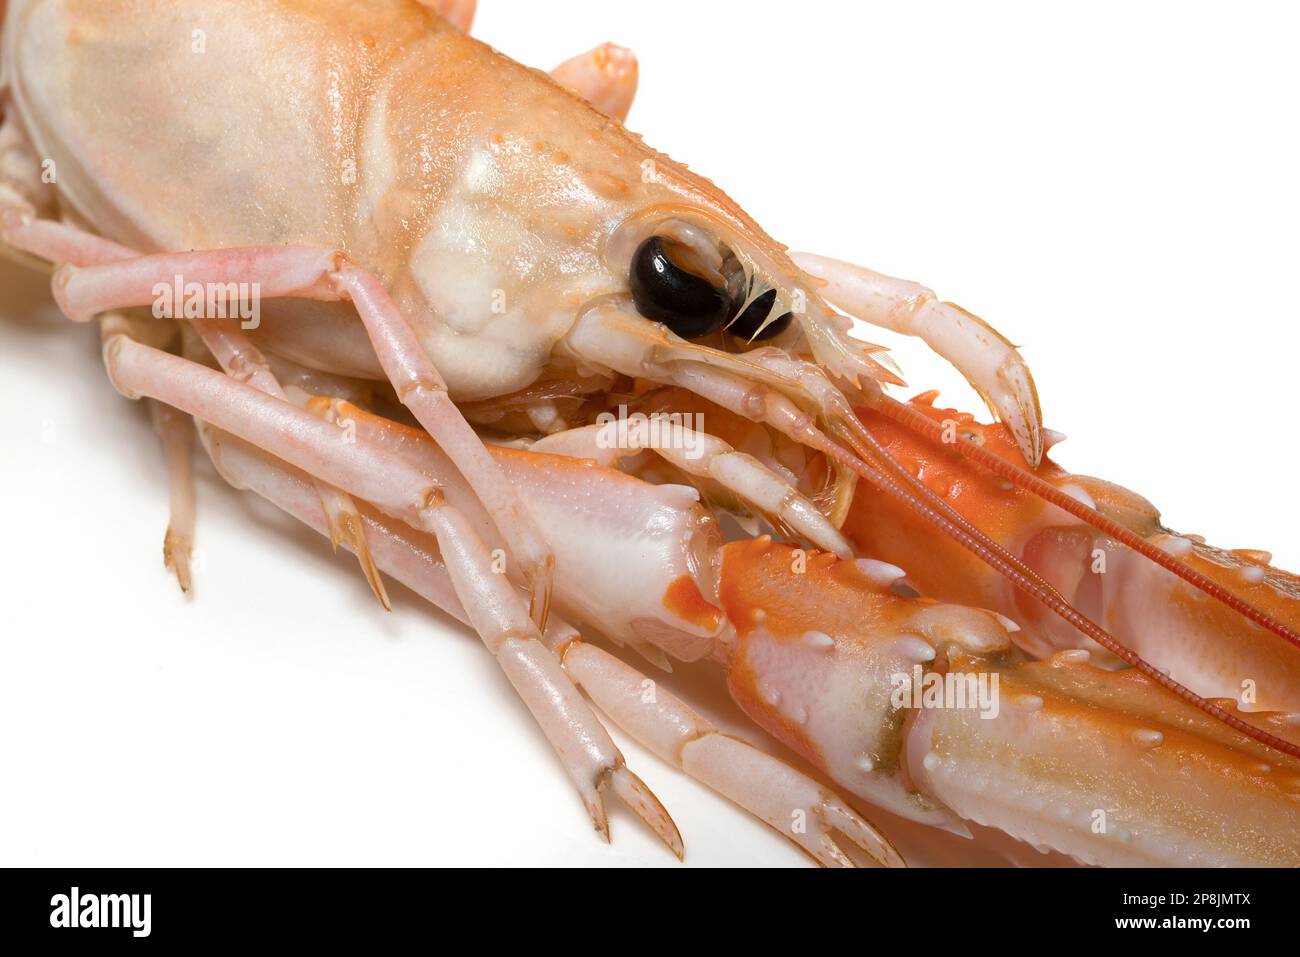 Raw Langoustine/ Norway Lobster / Dublin Bay Prawn / Scampi (Nephrops norvegicus) Stock Photo